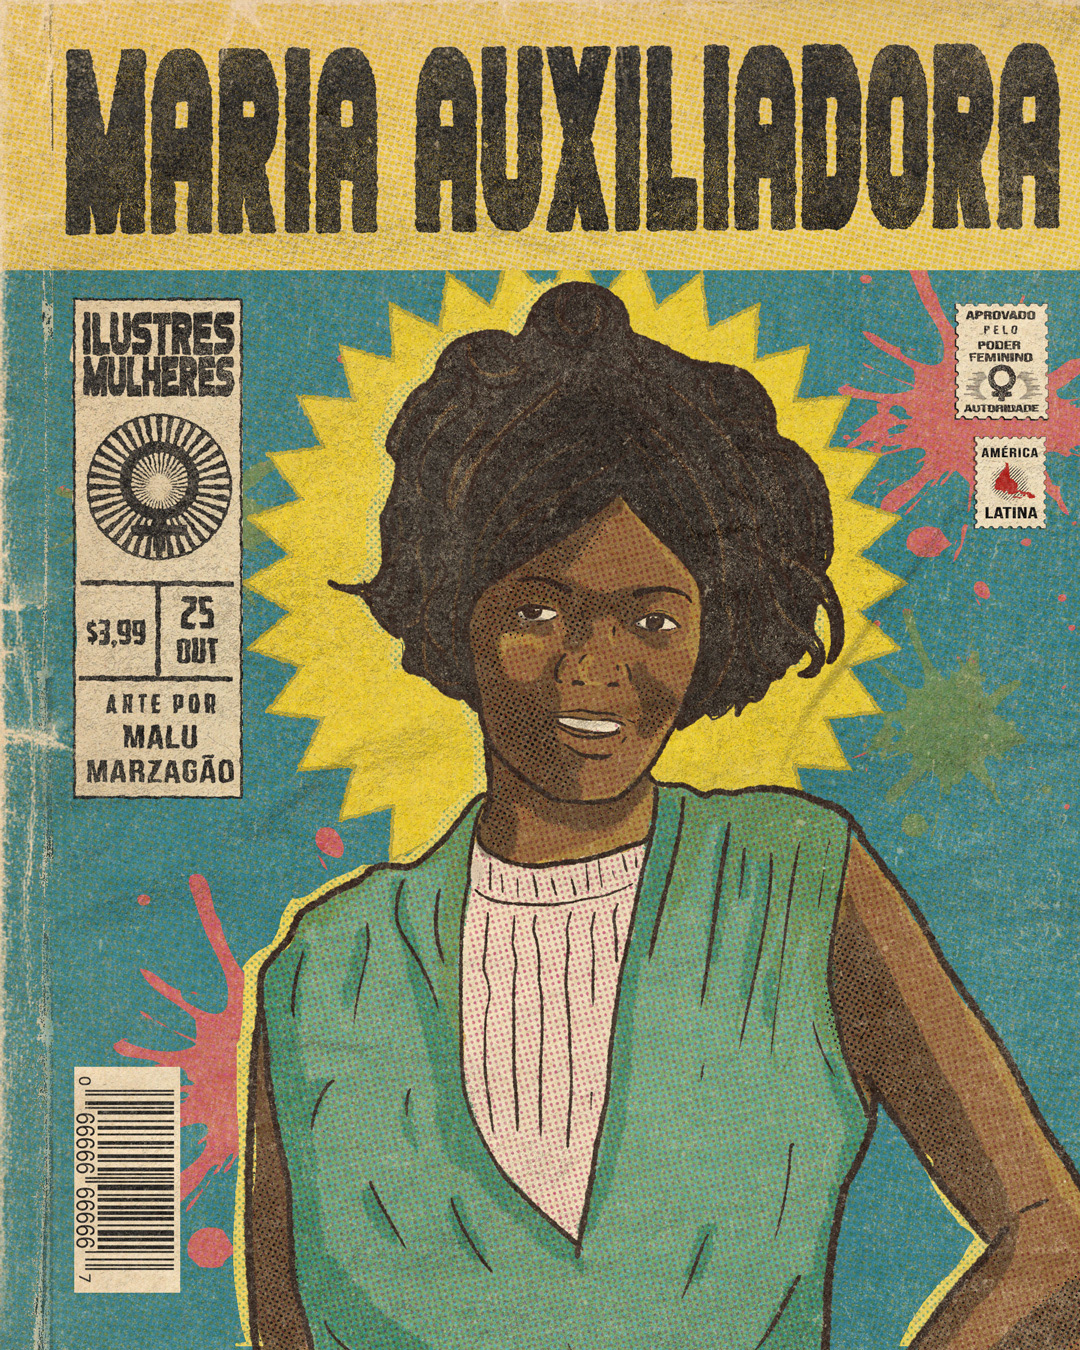 comics comics cover cover hq ilustres mulheres quadrinhos true grit texture supply vintage